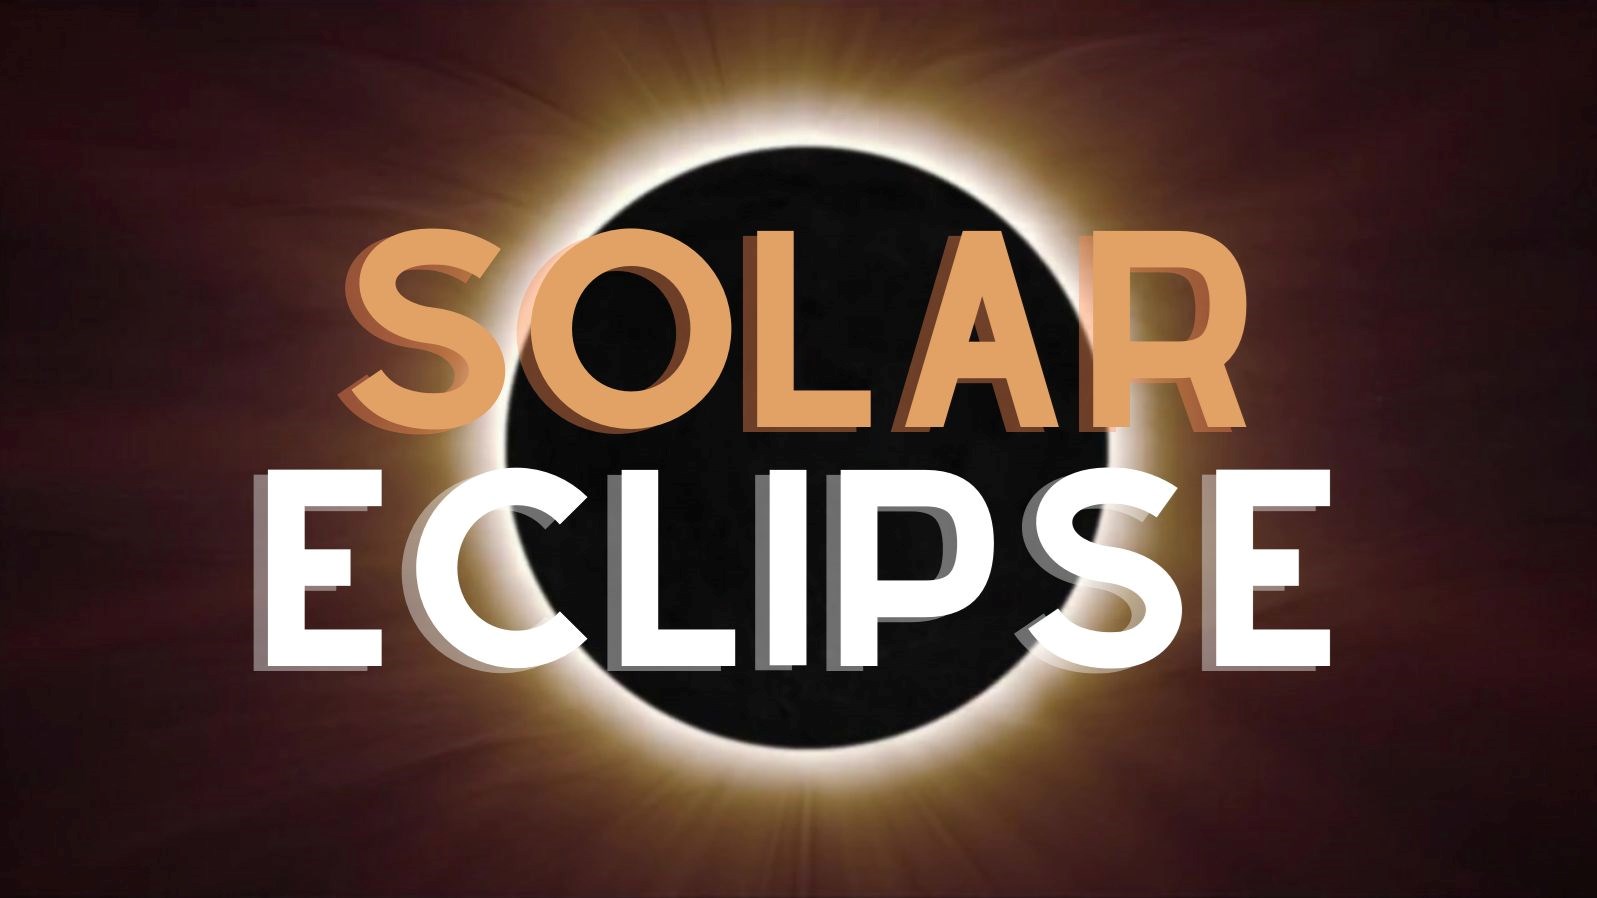 image: Solar Eclipse. Text reads Solar Eclipse